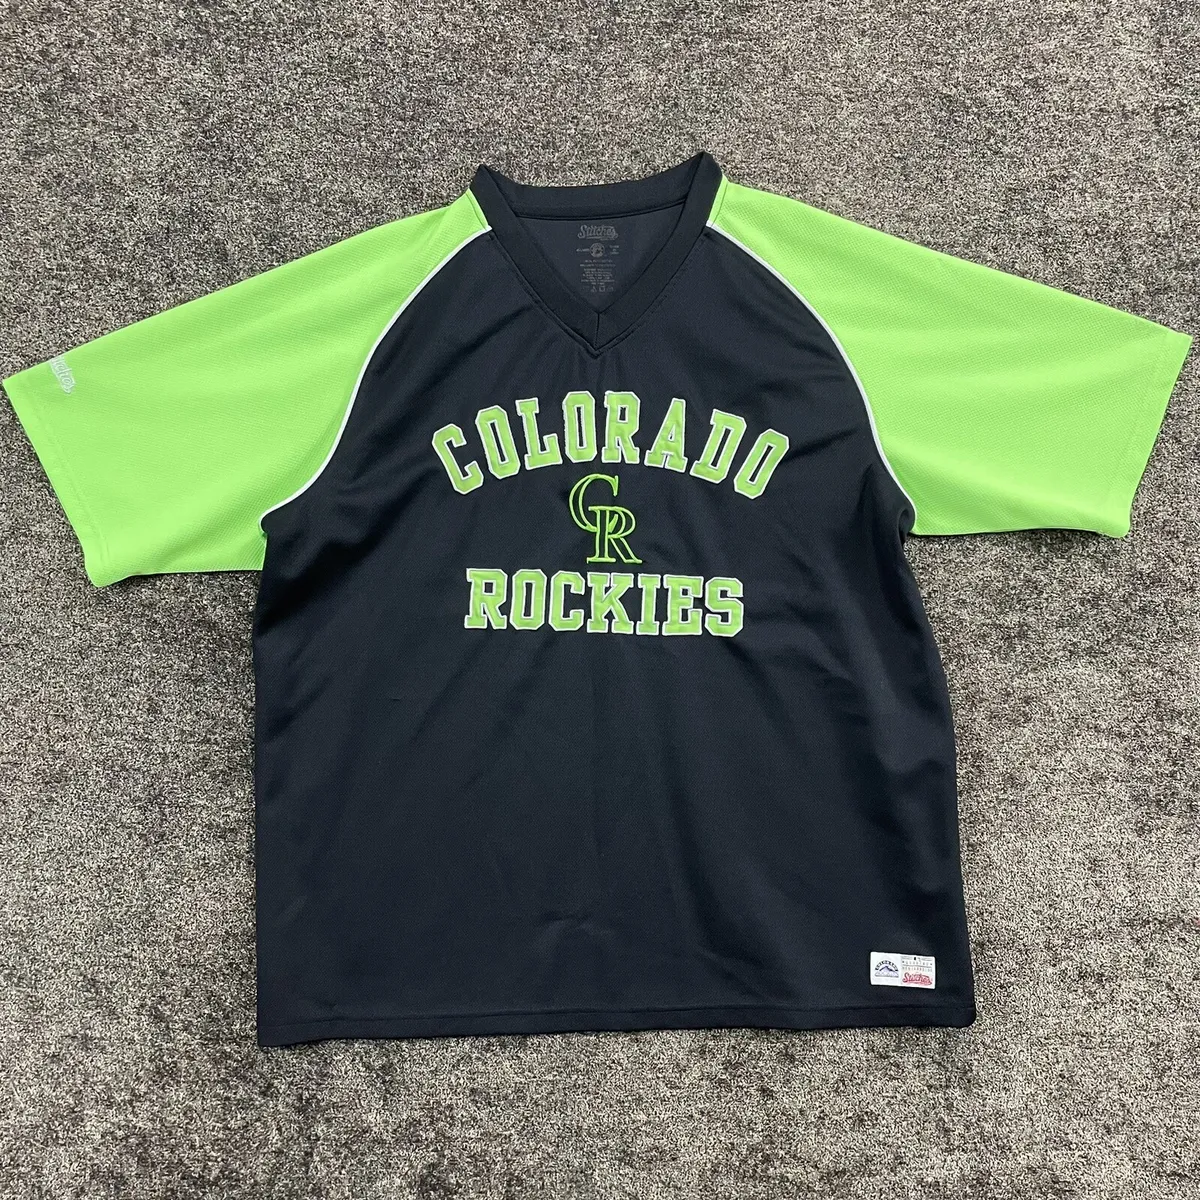 rockies green uniform